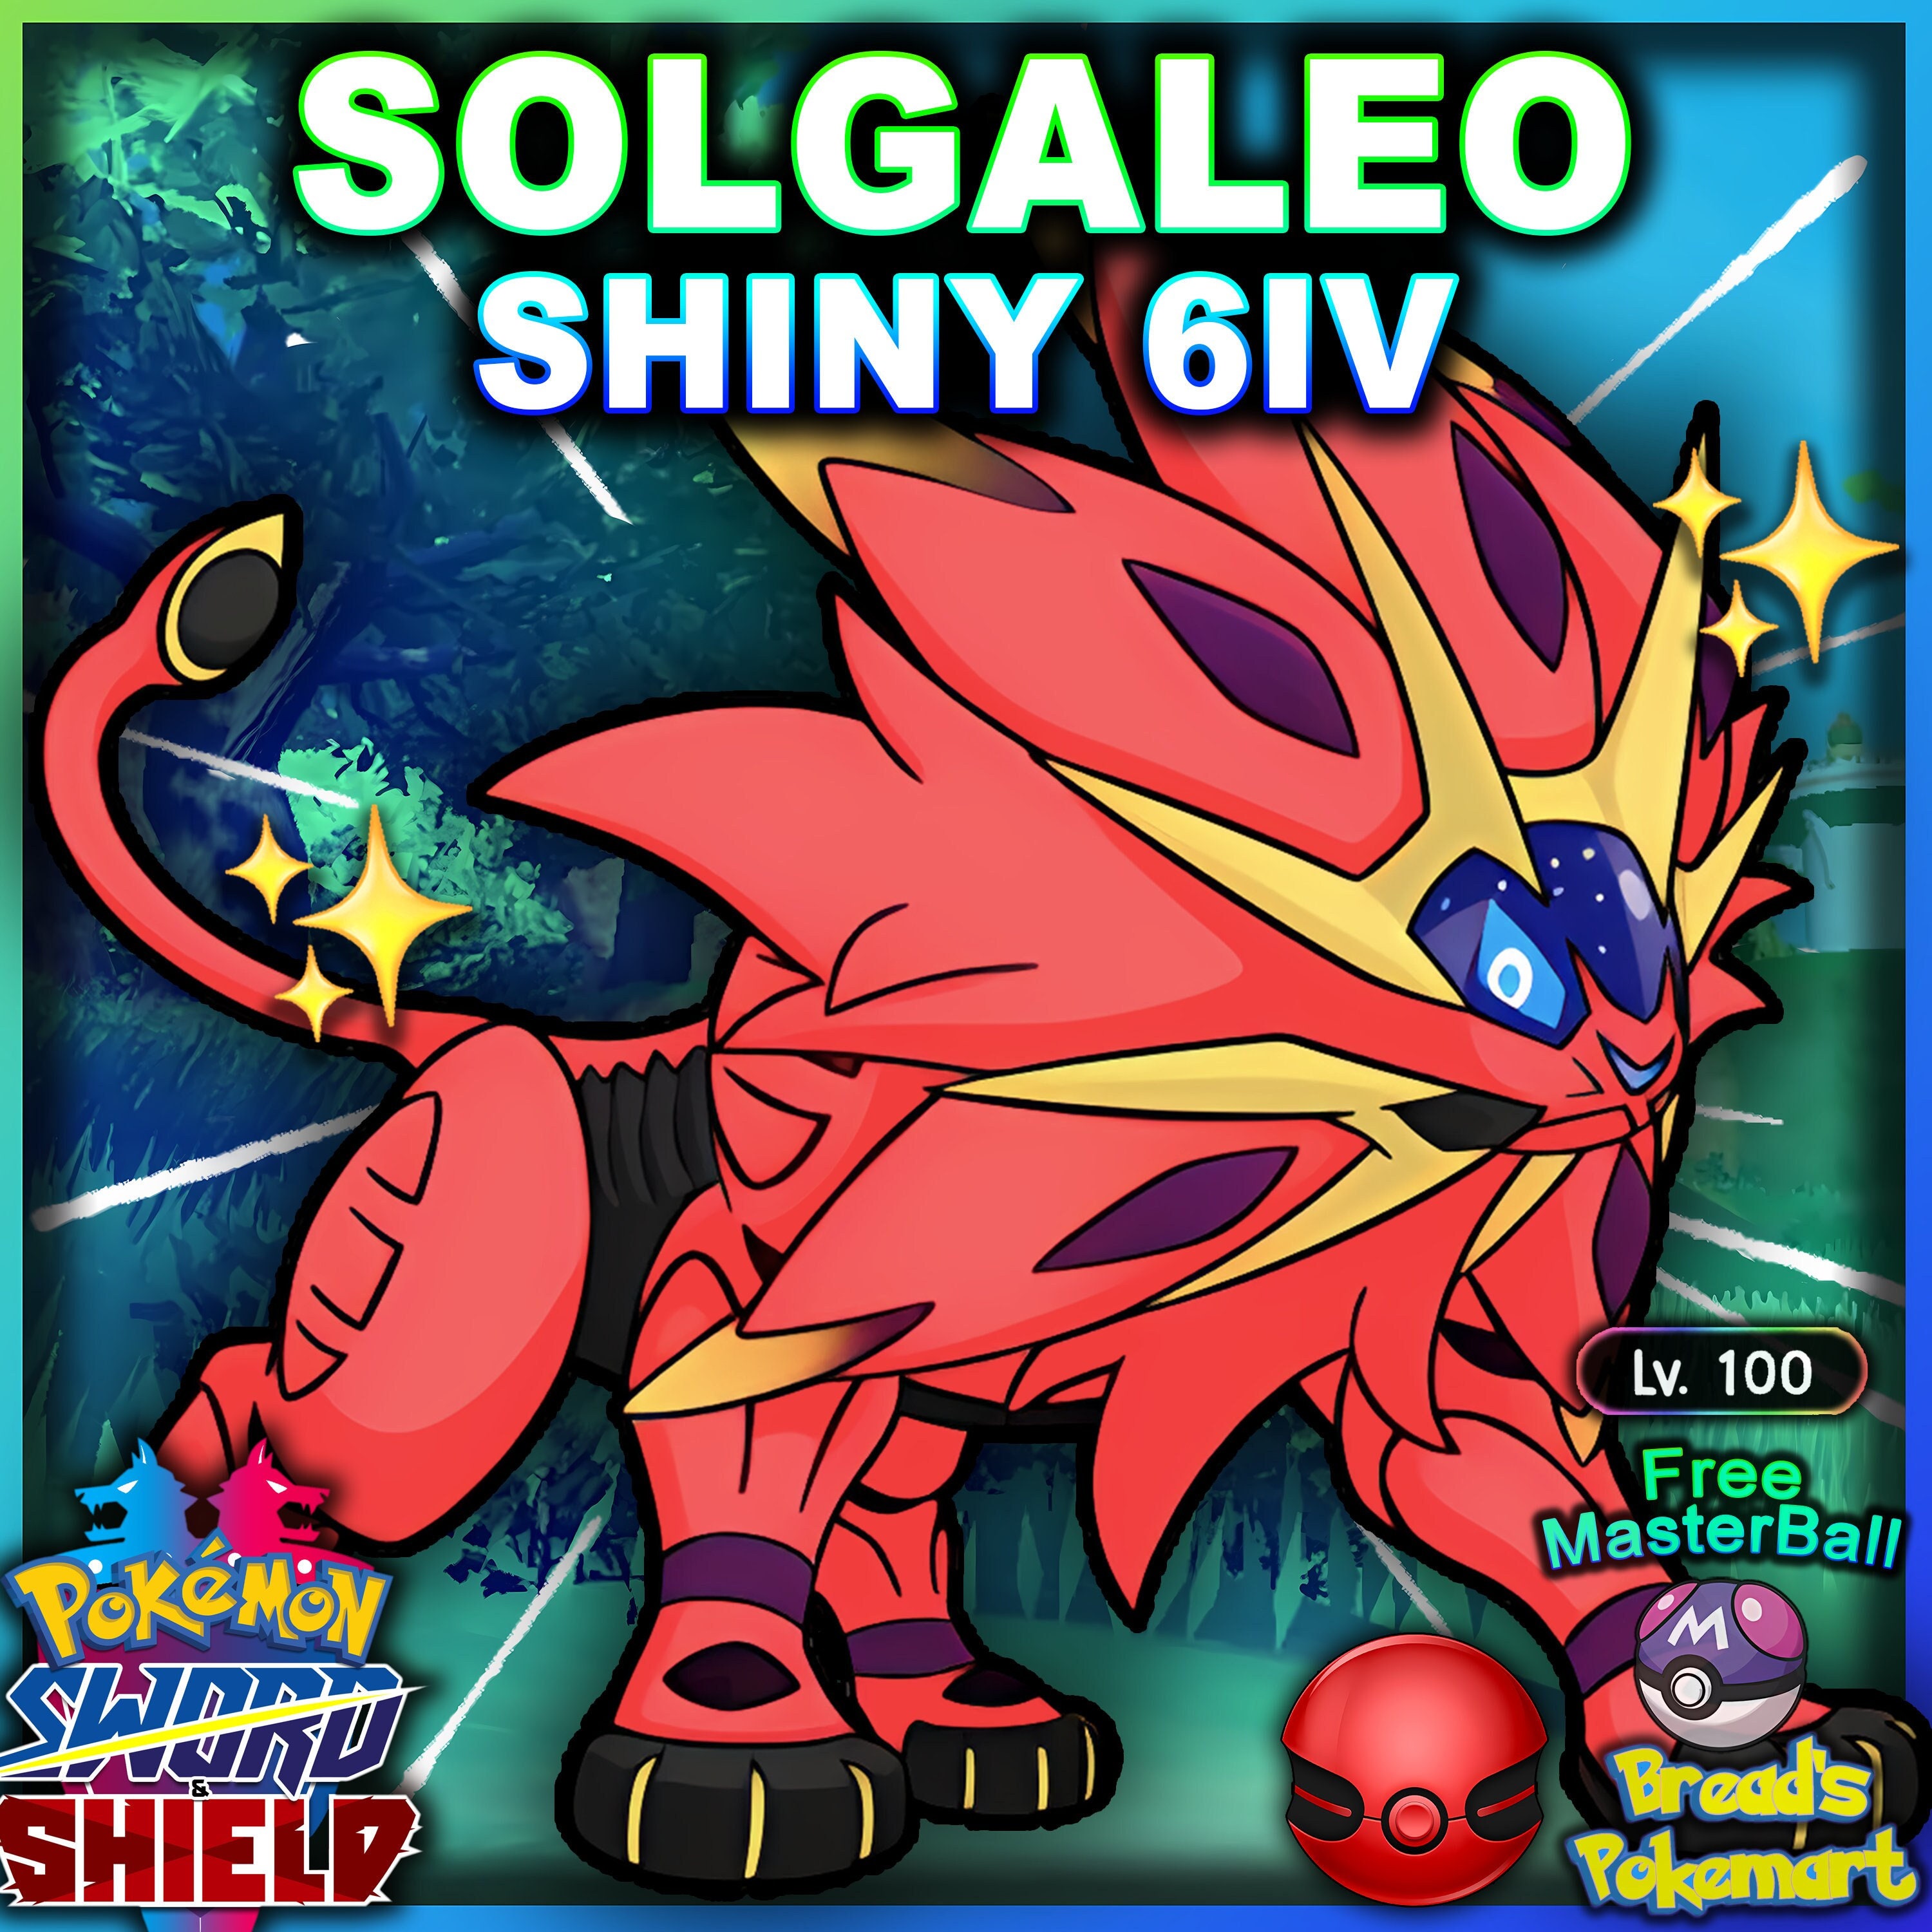 Pokemon Sword & Shield - SOLGALEO + LUNALA, 6 IVS SHINY EVENT